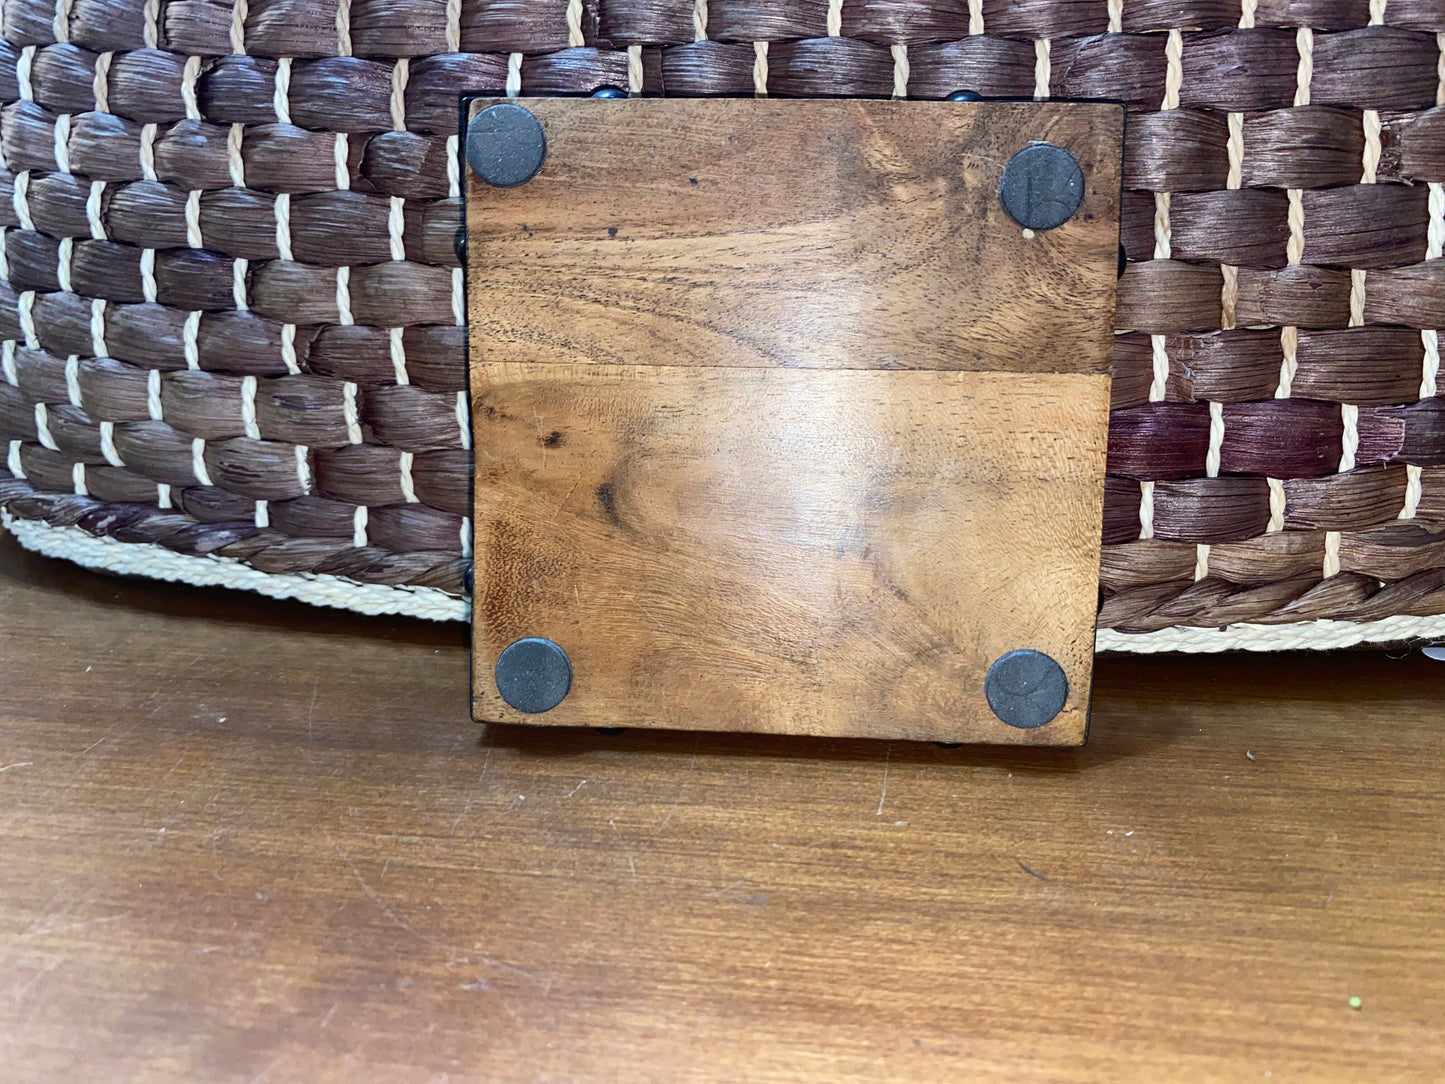 Laser Engraved Acacia Wood Coaster - "Bourbon"